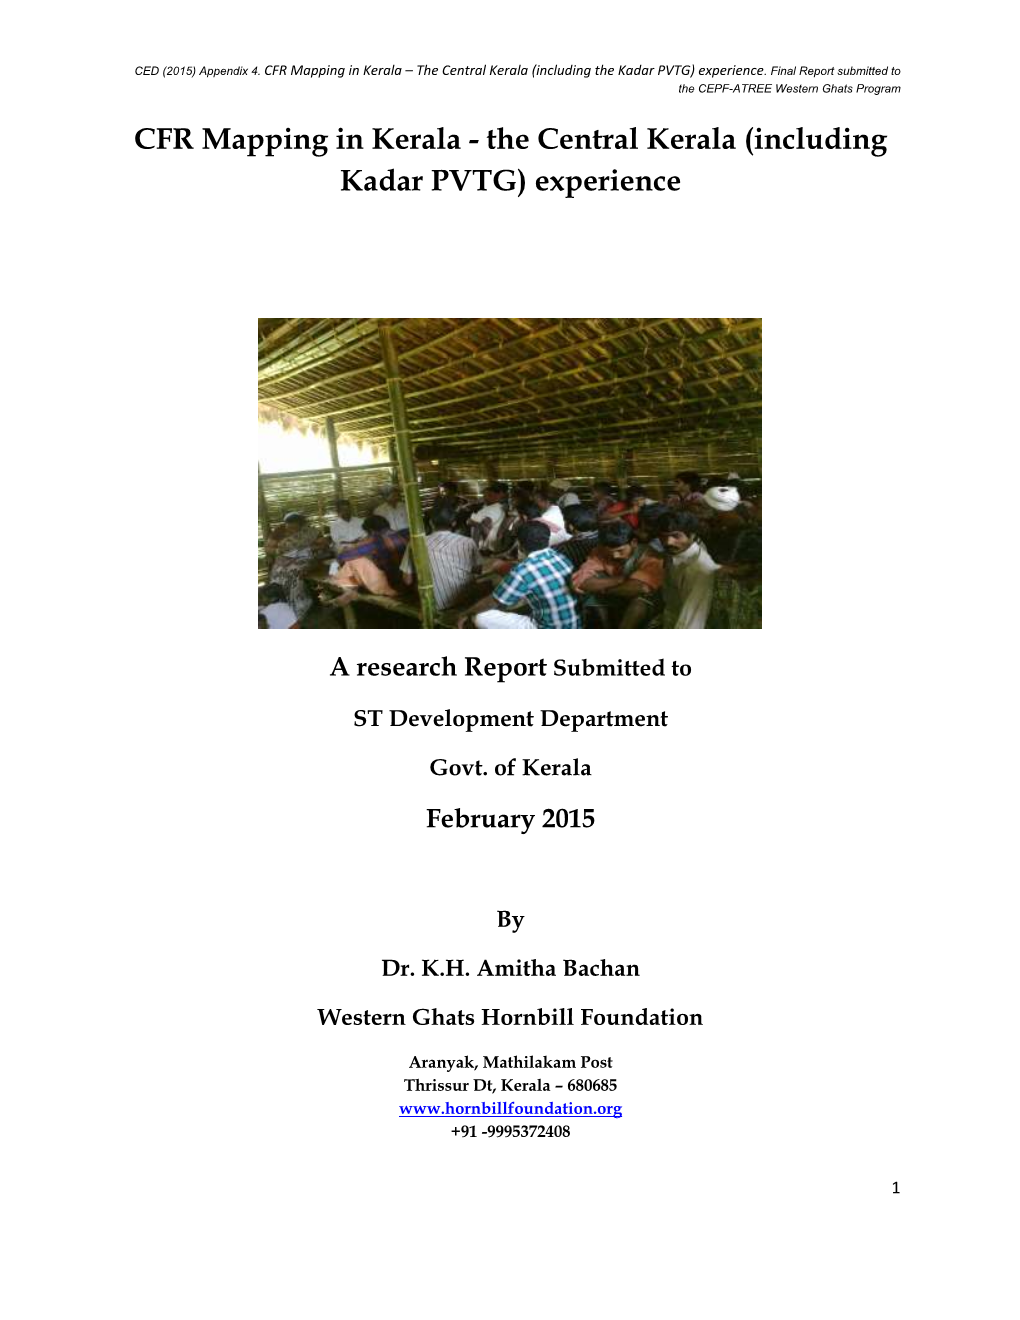 The Central Kerala (Including the Kadar PVTG) Experience